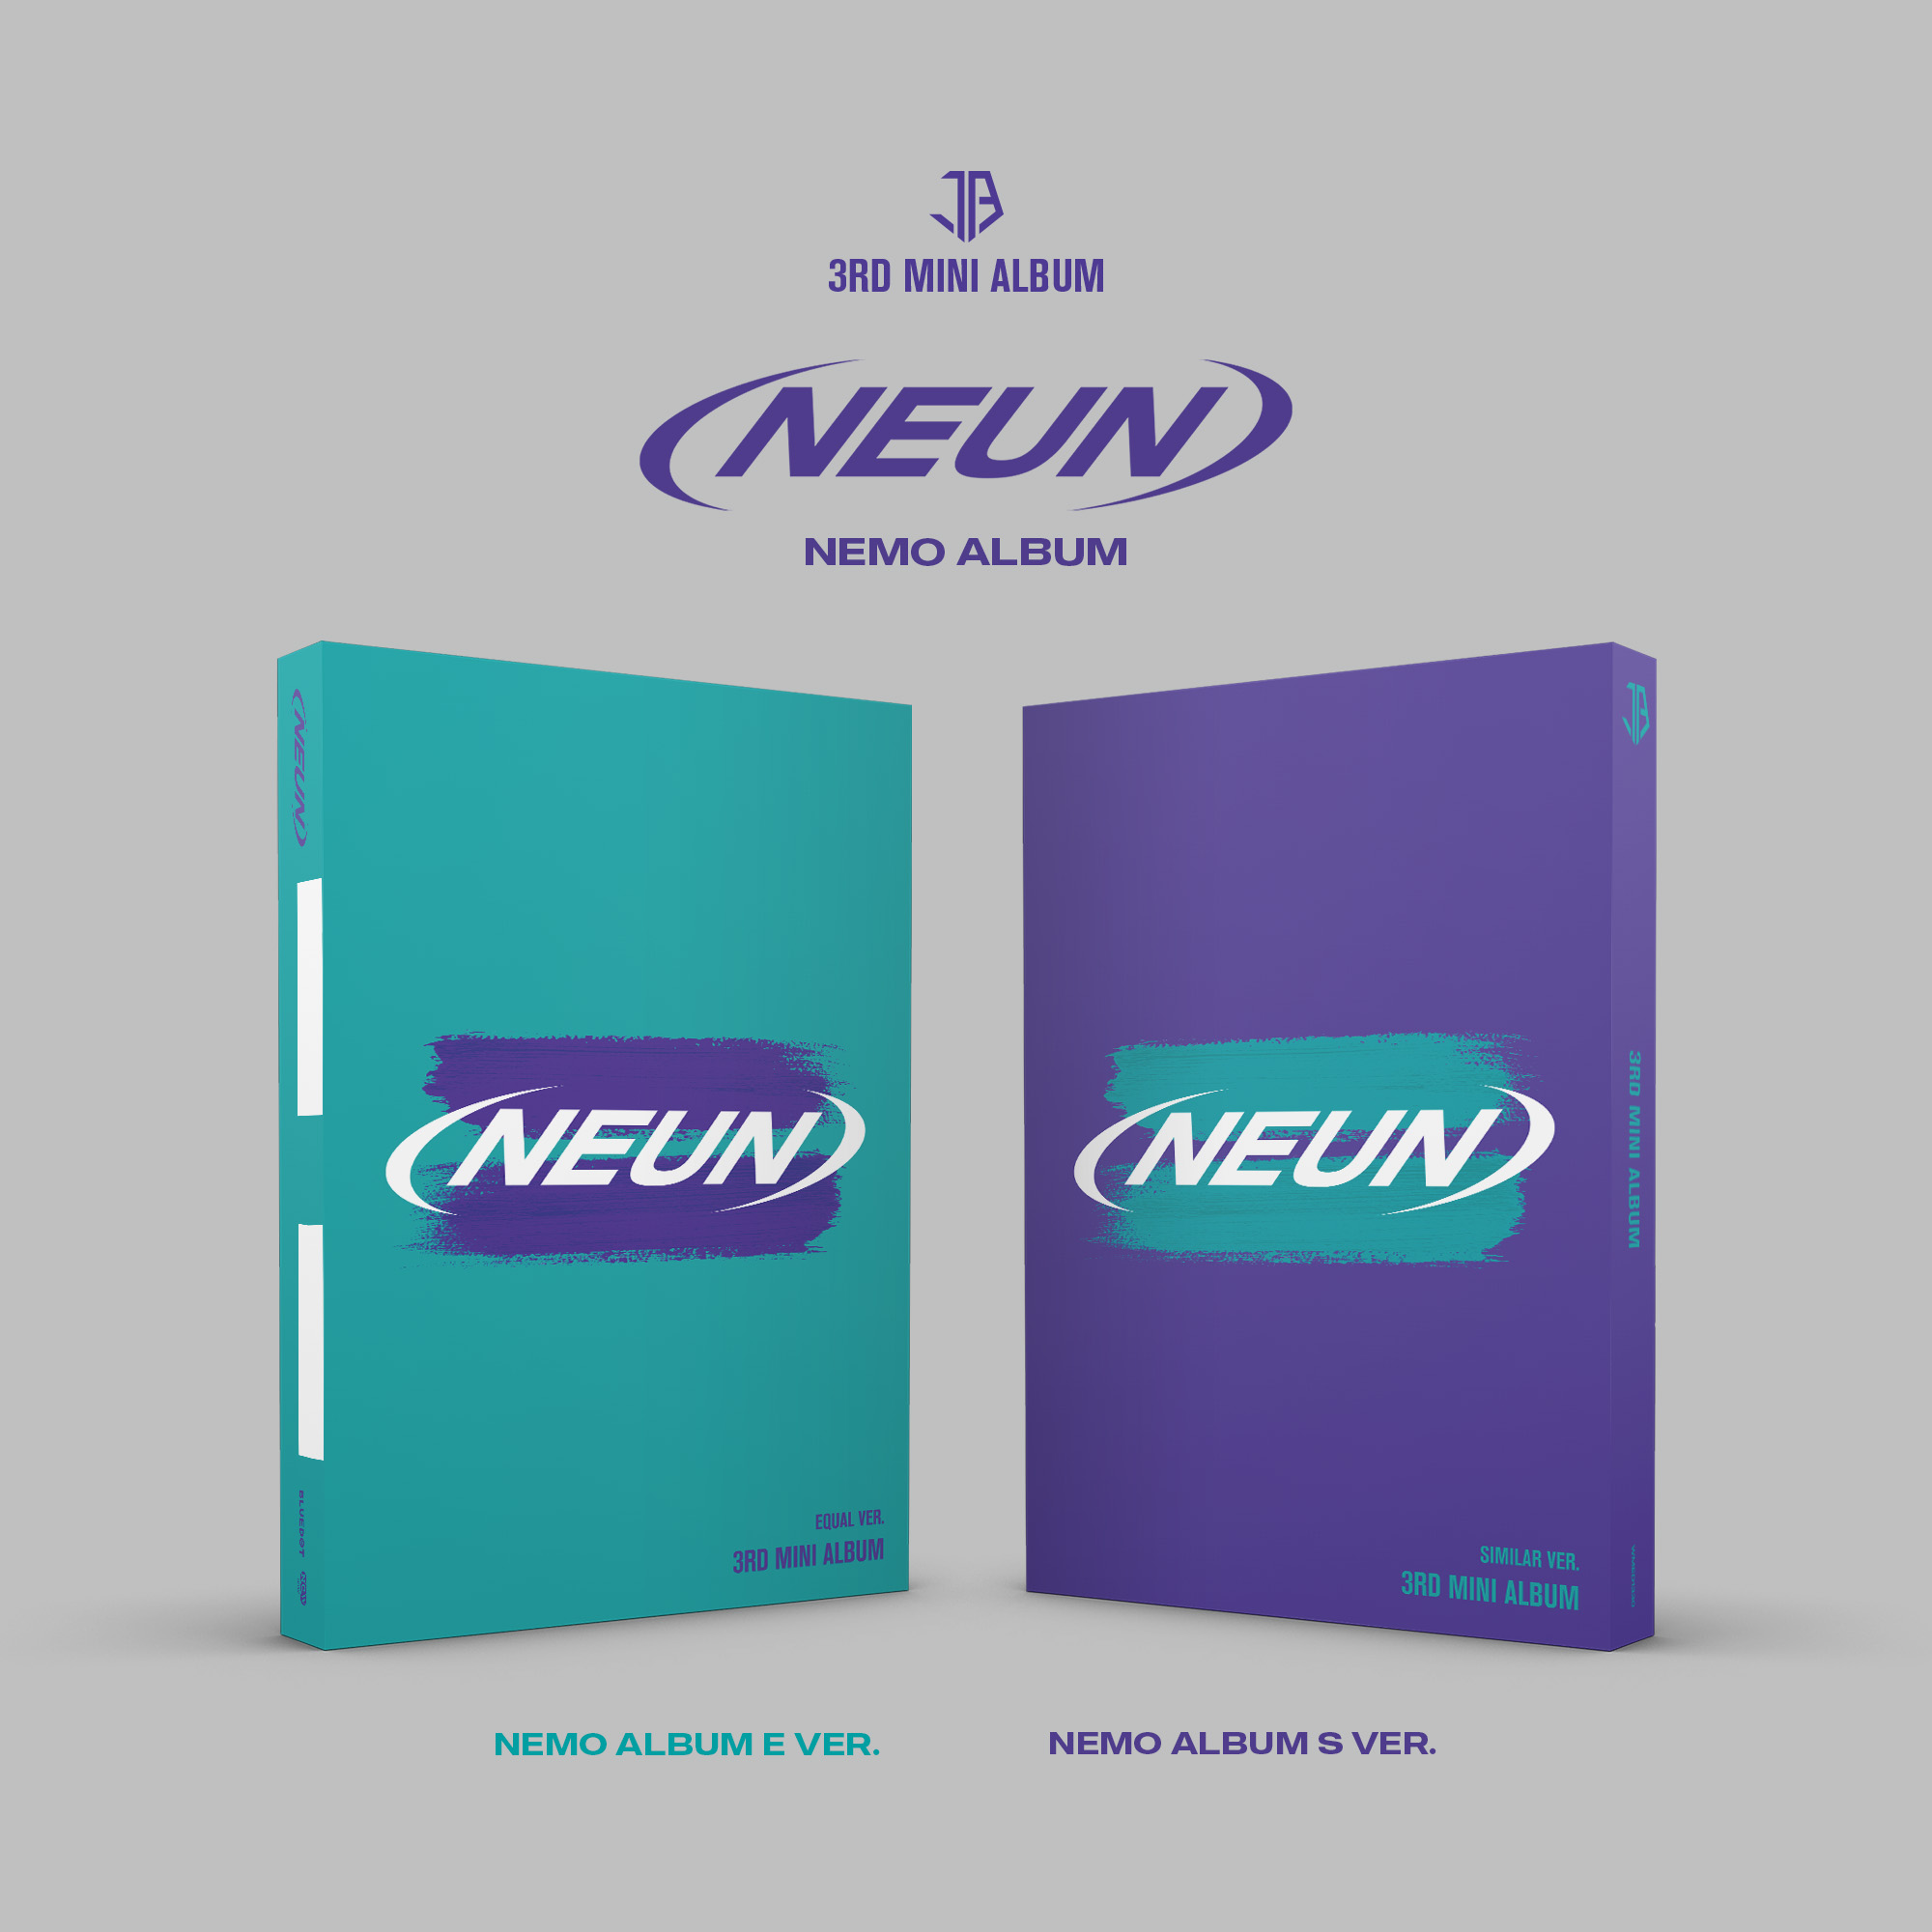 [全款 裸专] [2CD 套装] JUST B - 迷你3辑 [= (NEUN)] (Nemo Album E ver. + Nemo Album S ver.)_Iridescent彩虹站